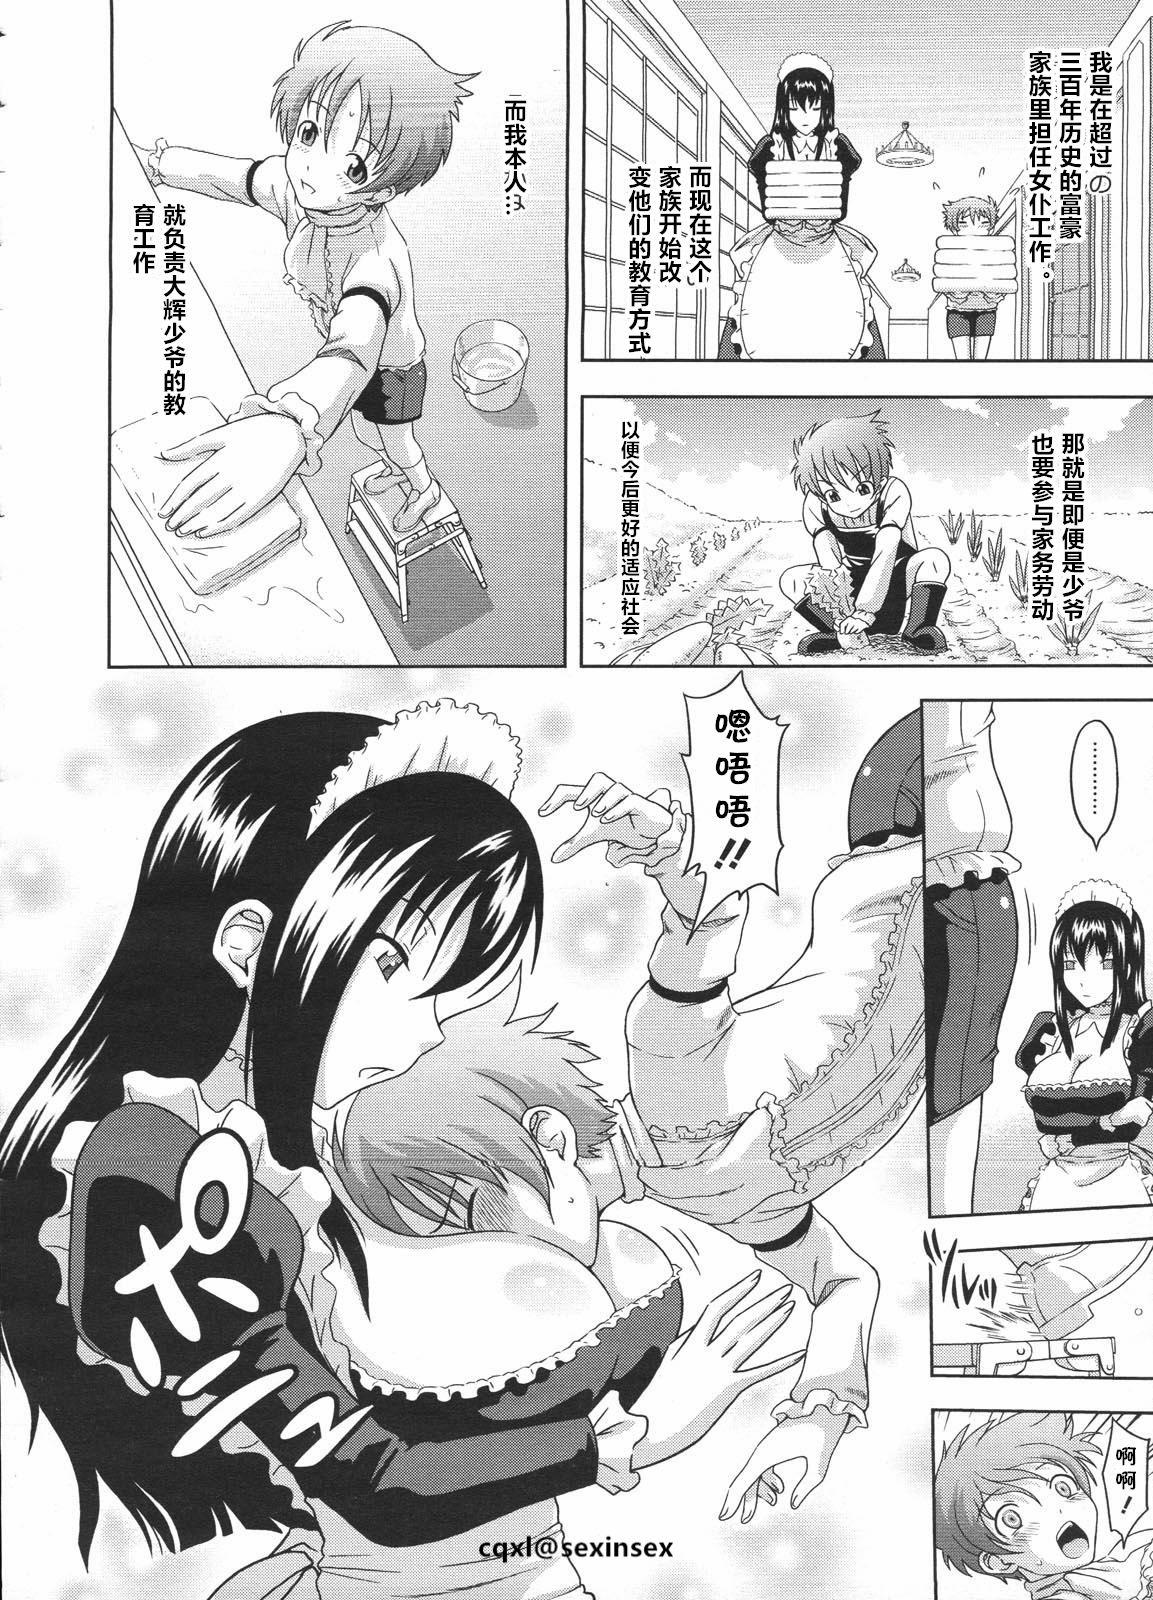 Kiss Kyouikugakari no Ranko-san Yanks Featured - Page 2